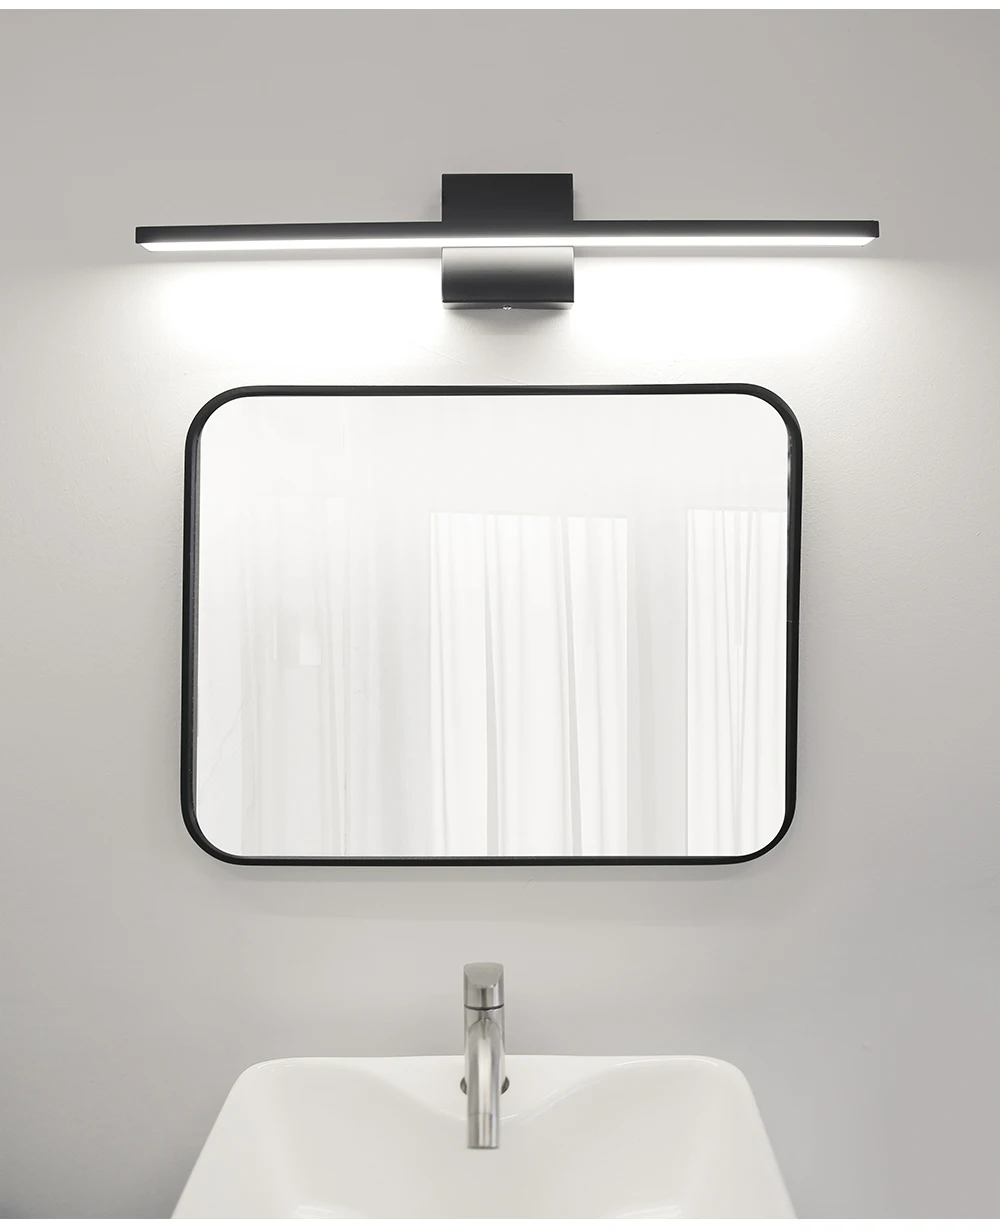 Wall Light Indoor Modern Bathroom Light AC85-265V  LED Bathroom Lighting for Over Mirror Vanity Lighting Fixtures Mirror Lamp bathroom sconce lights